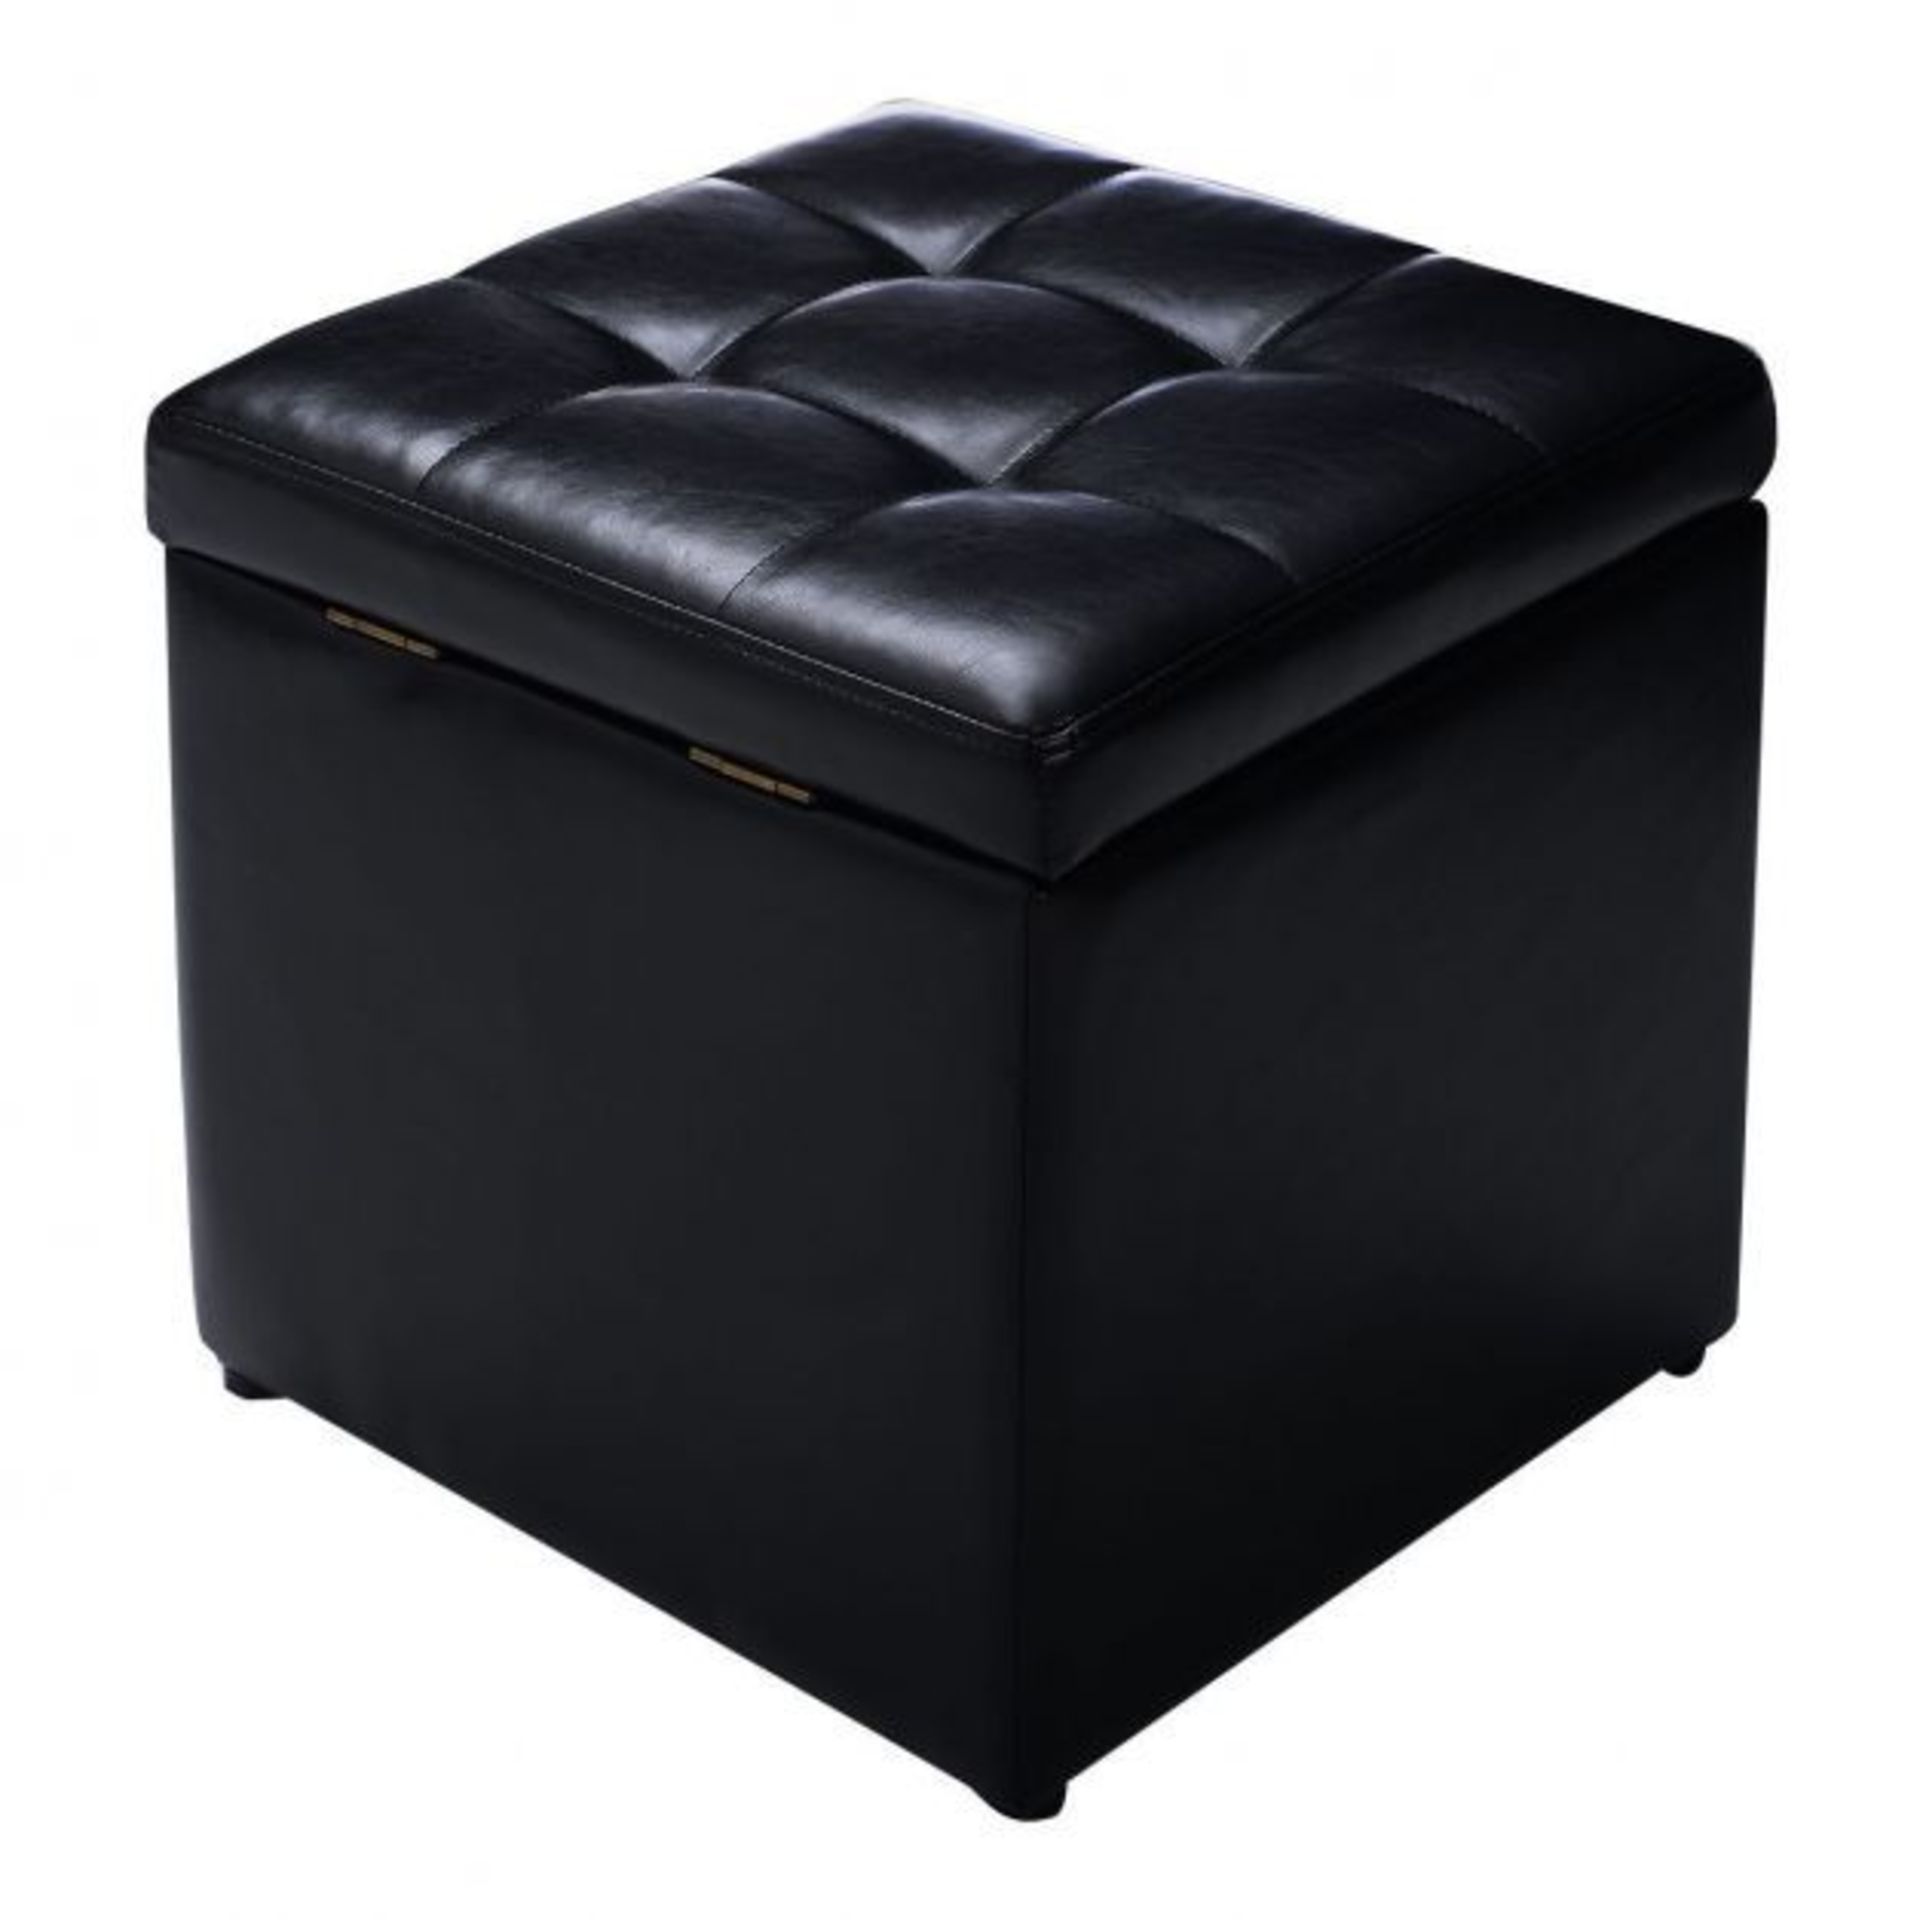 High Quality PU Leather Cube Ottoman Storage Seat. - ER26. This ottoman storage seat has a hinged